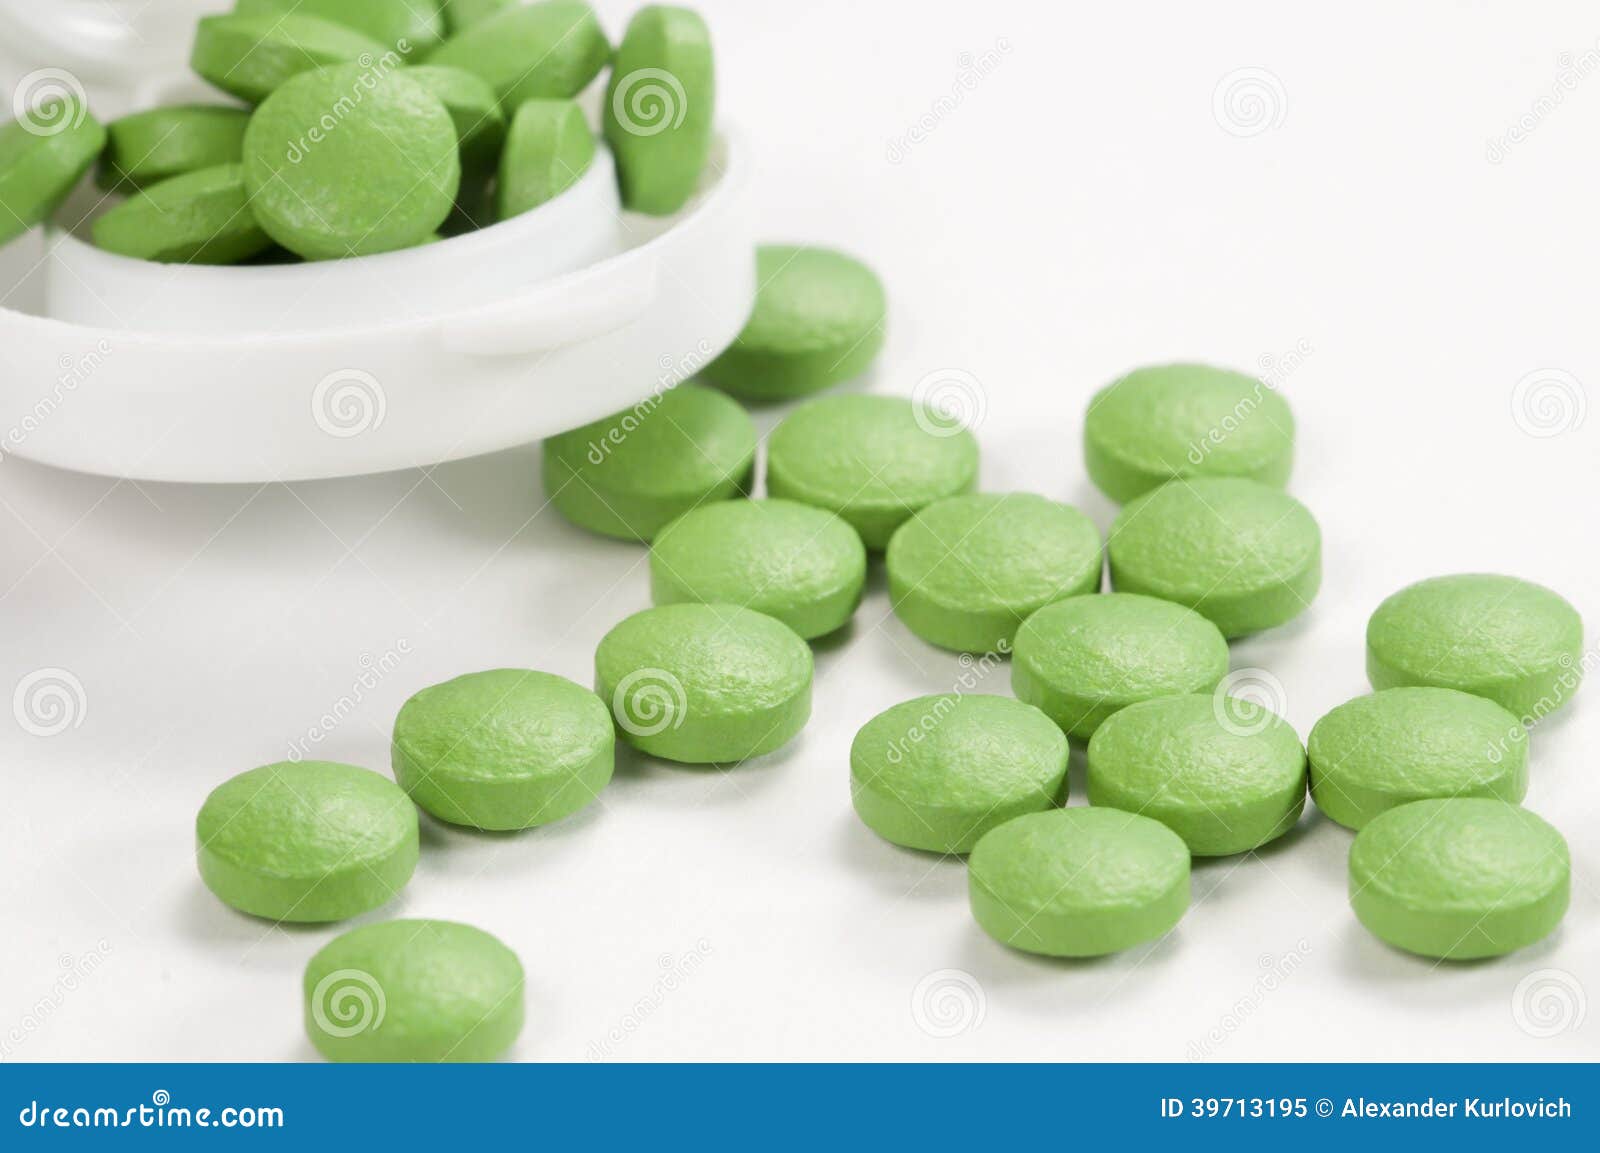 Зеленые антибиотики. Зеленые таблетки. Таблетки зеленого цвета. Таблетки бледно зеленого цвета. Зеленые таблетки витаминки.